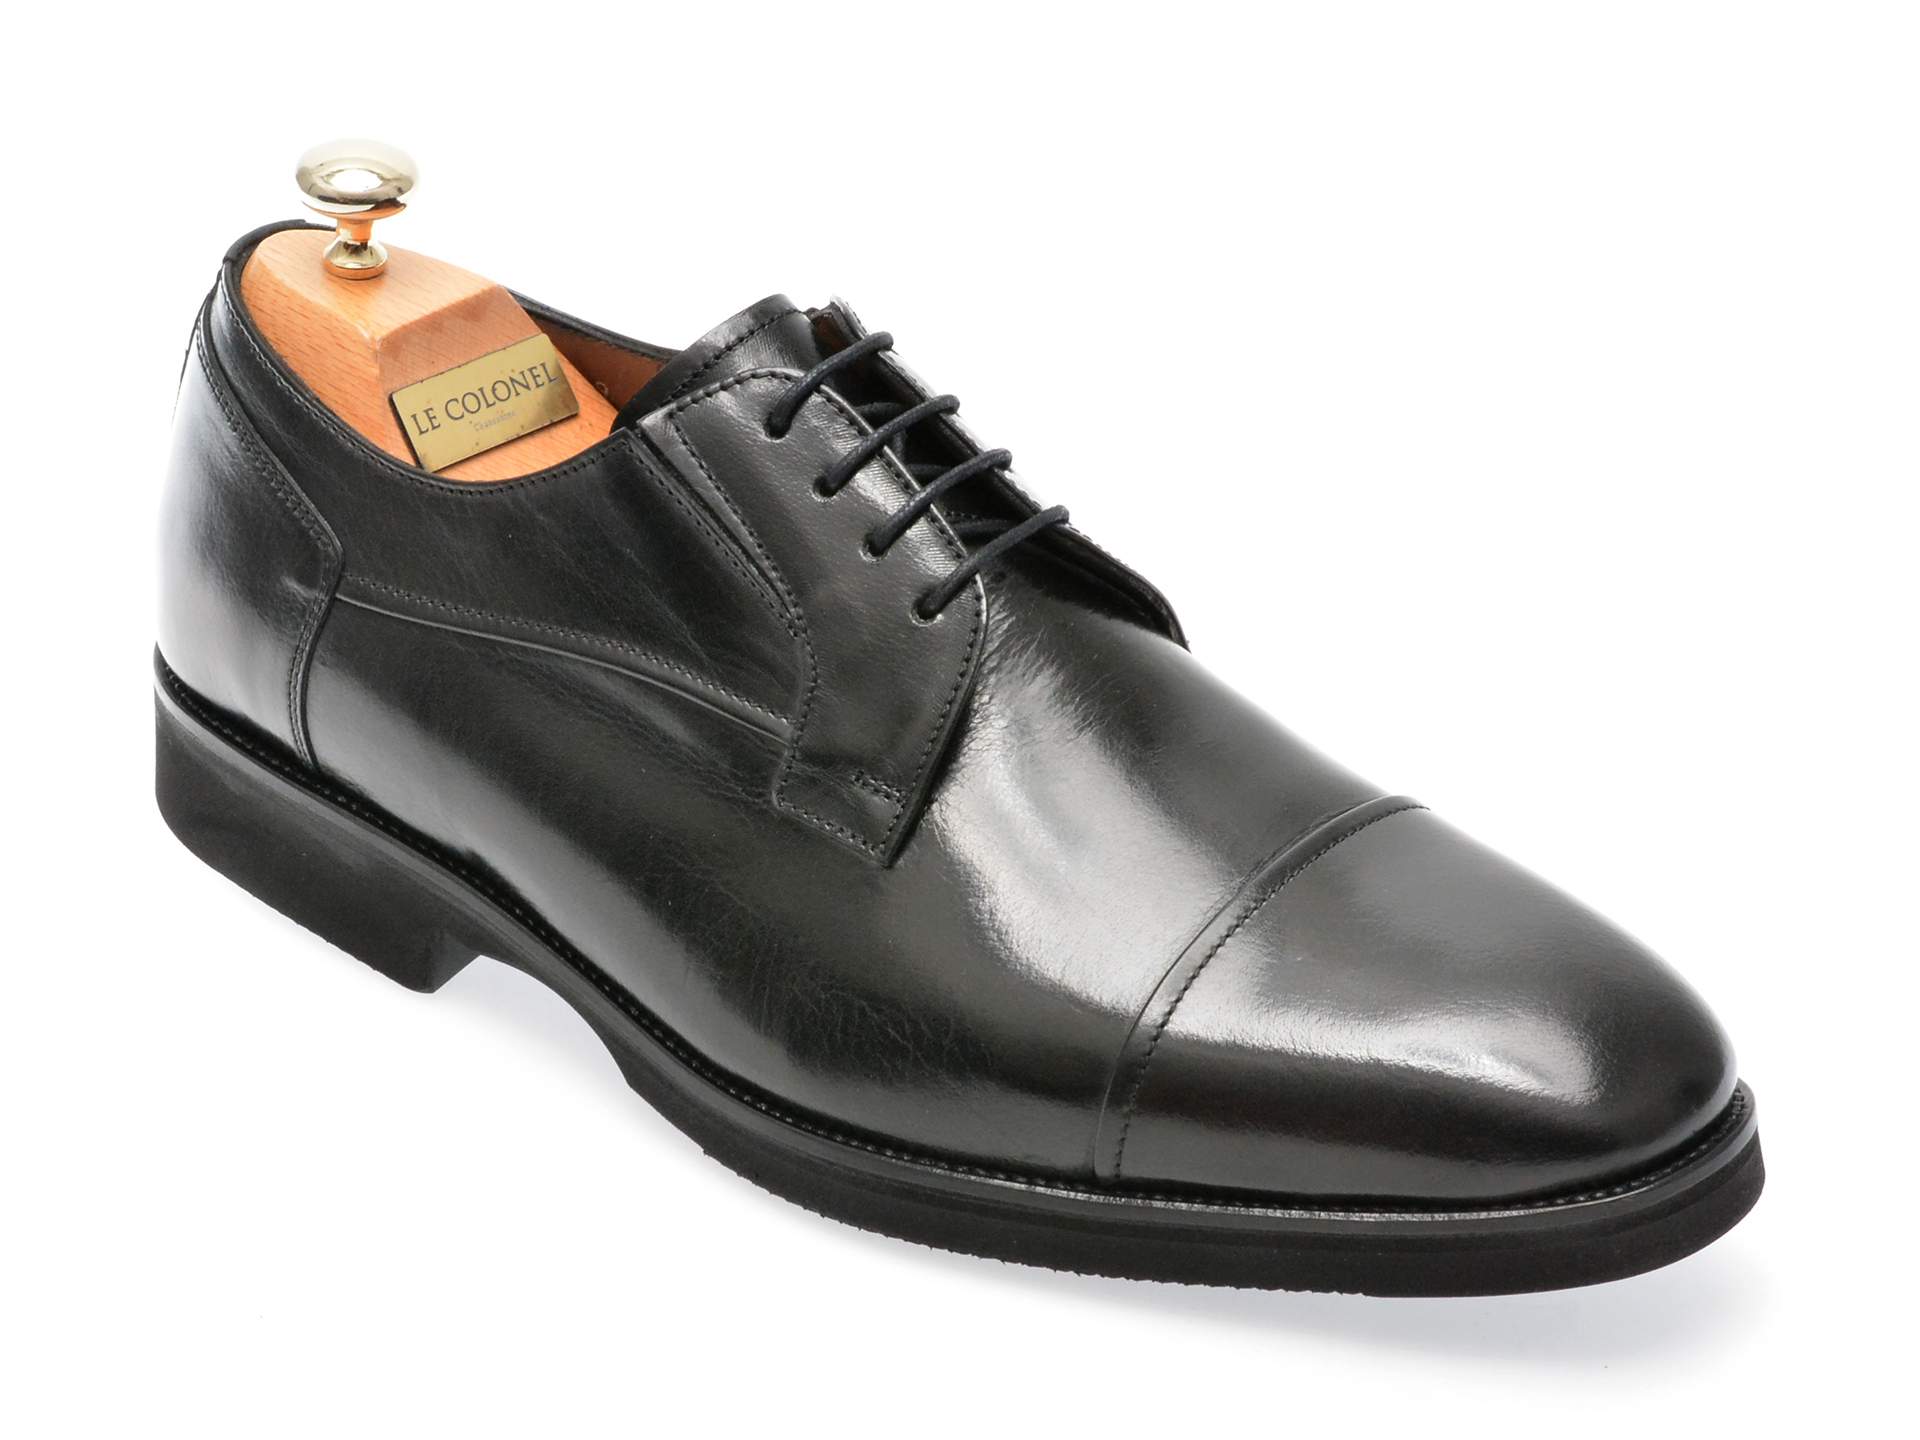 Pantofi LE COLONEL negri, 48409, din piele naturala imagine reduceri black friday 2021 Le Colonel